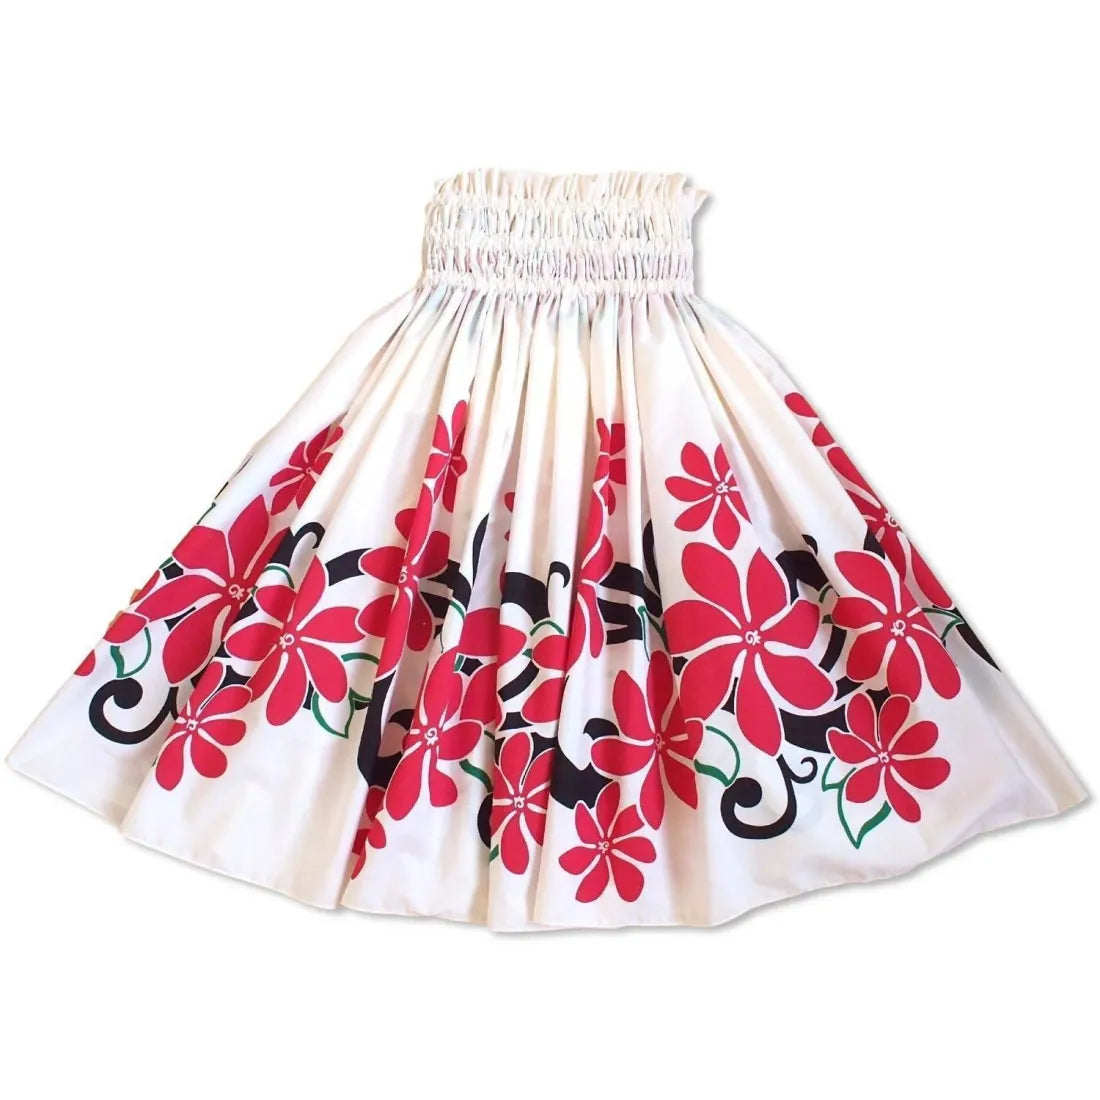 Mauna Loa White Single Pa’u Hawaiian Hula Skirt - Made In Hawaii